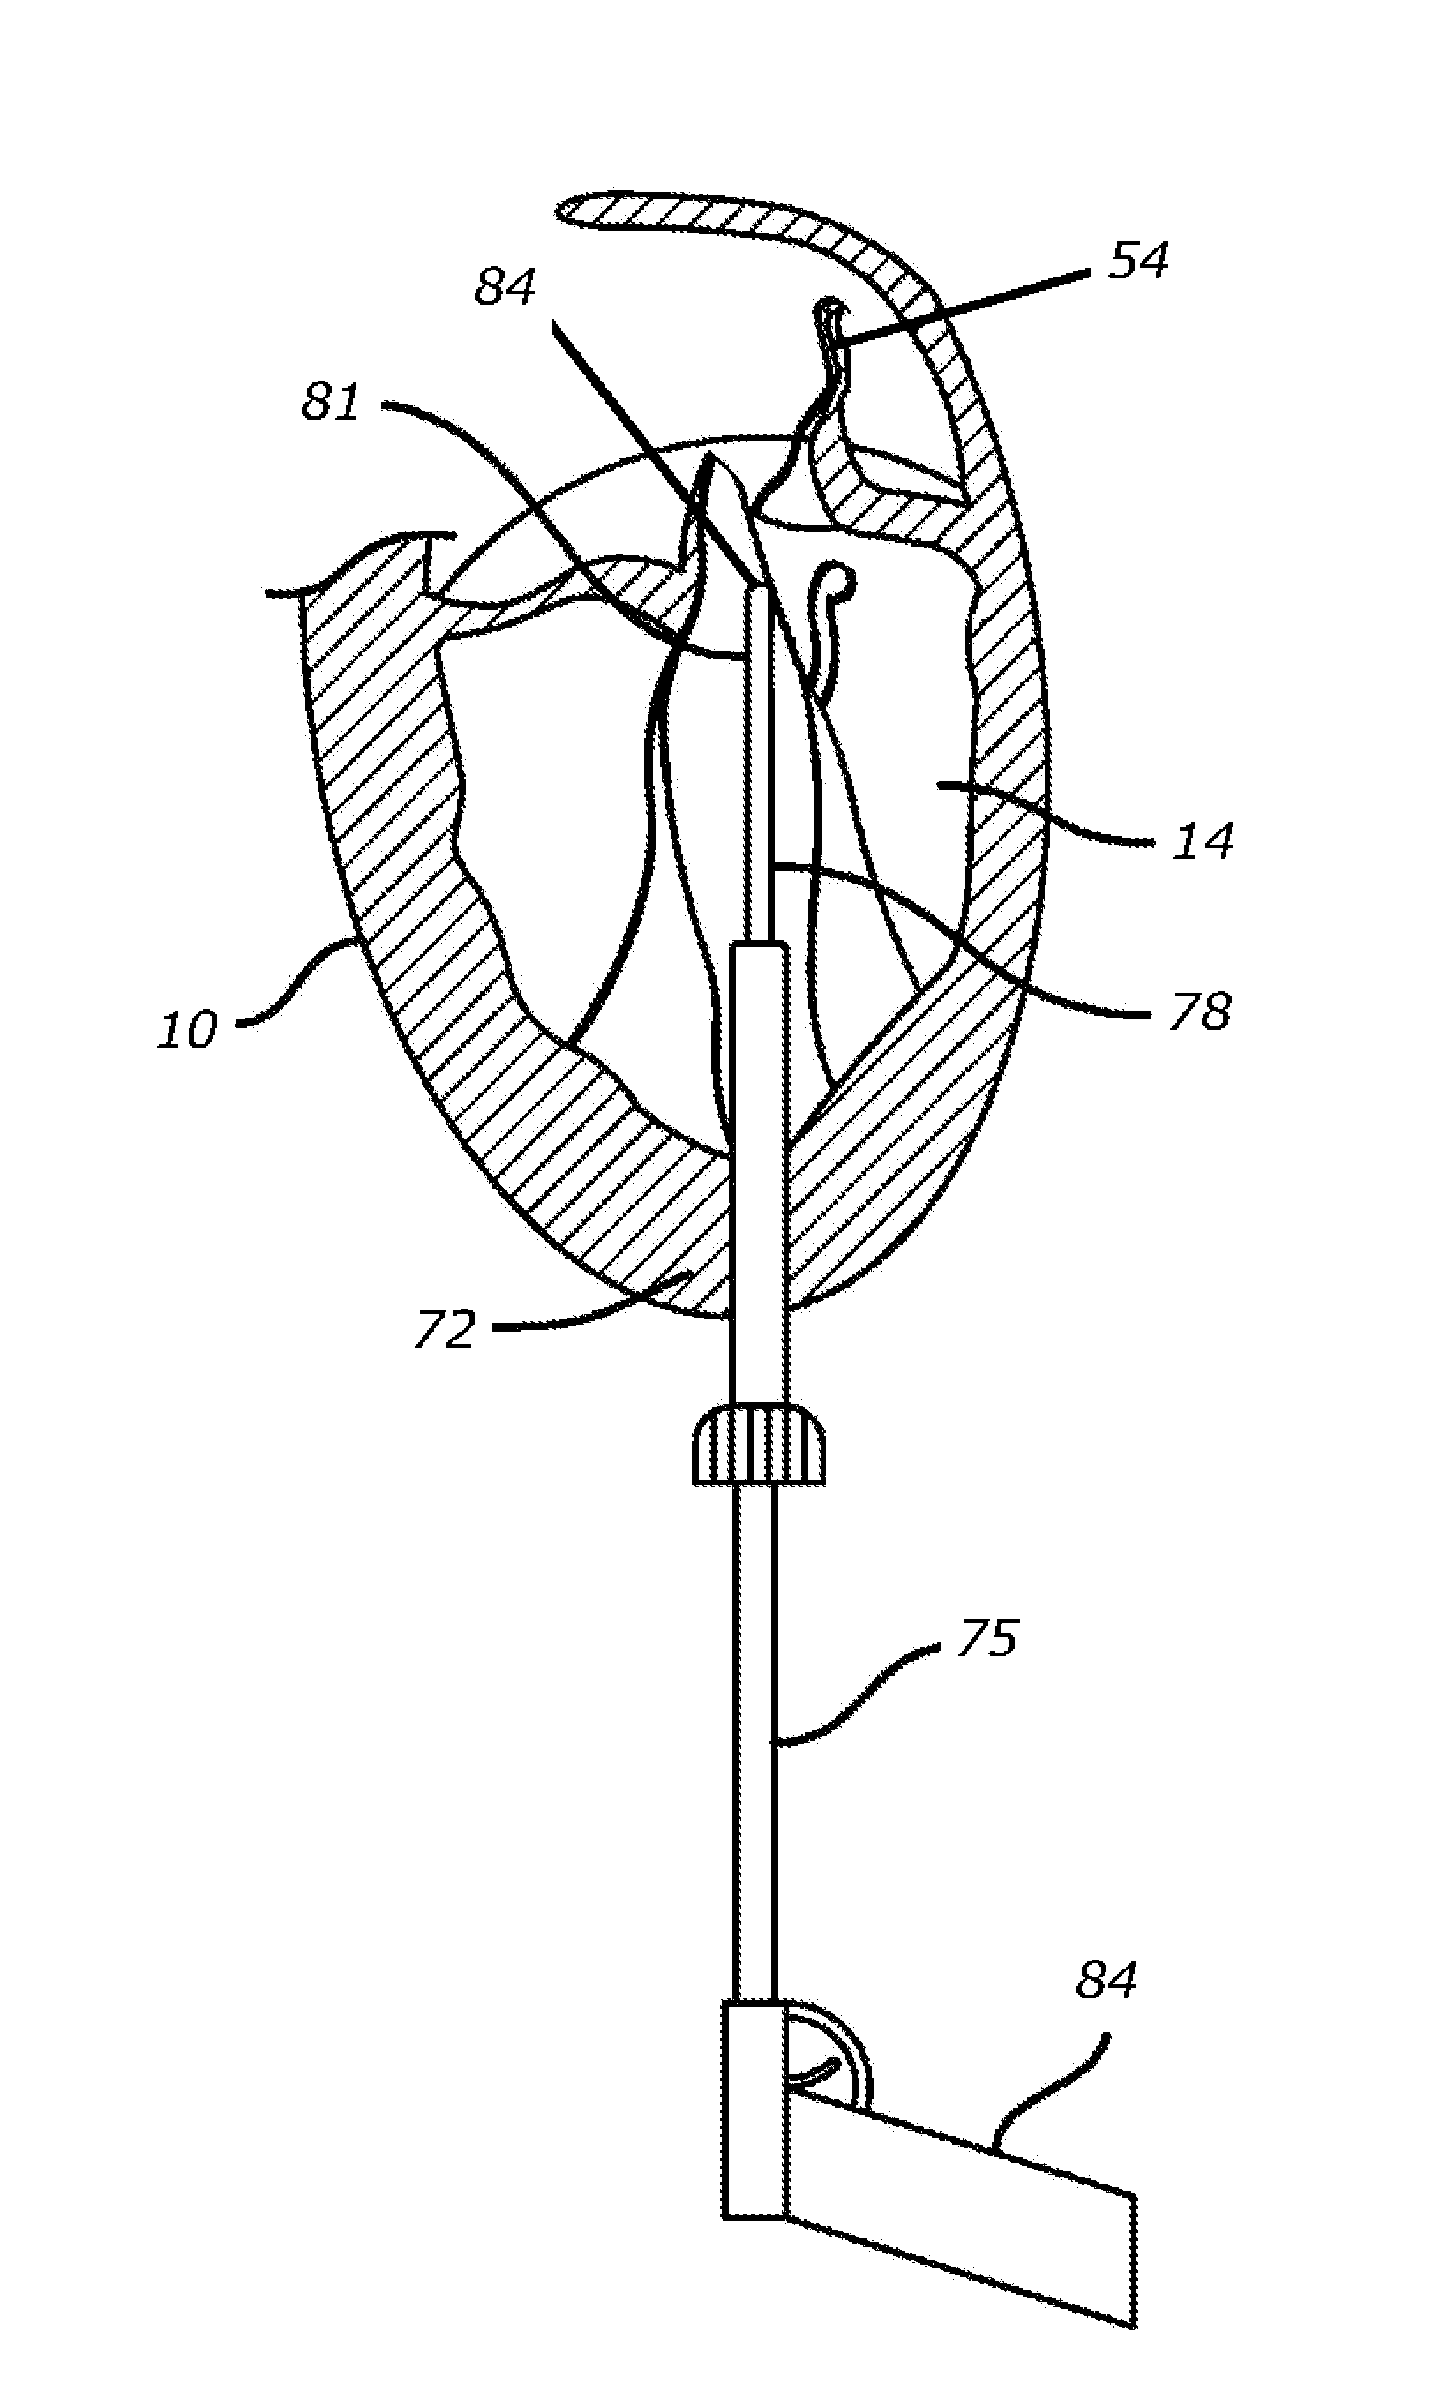 Transapical mitral valve repair device